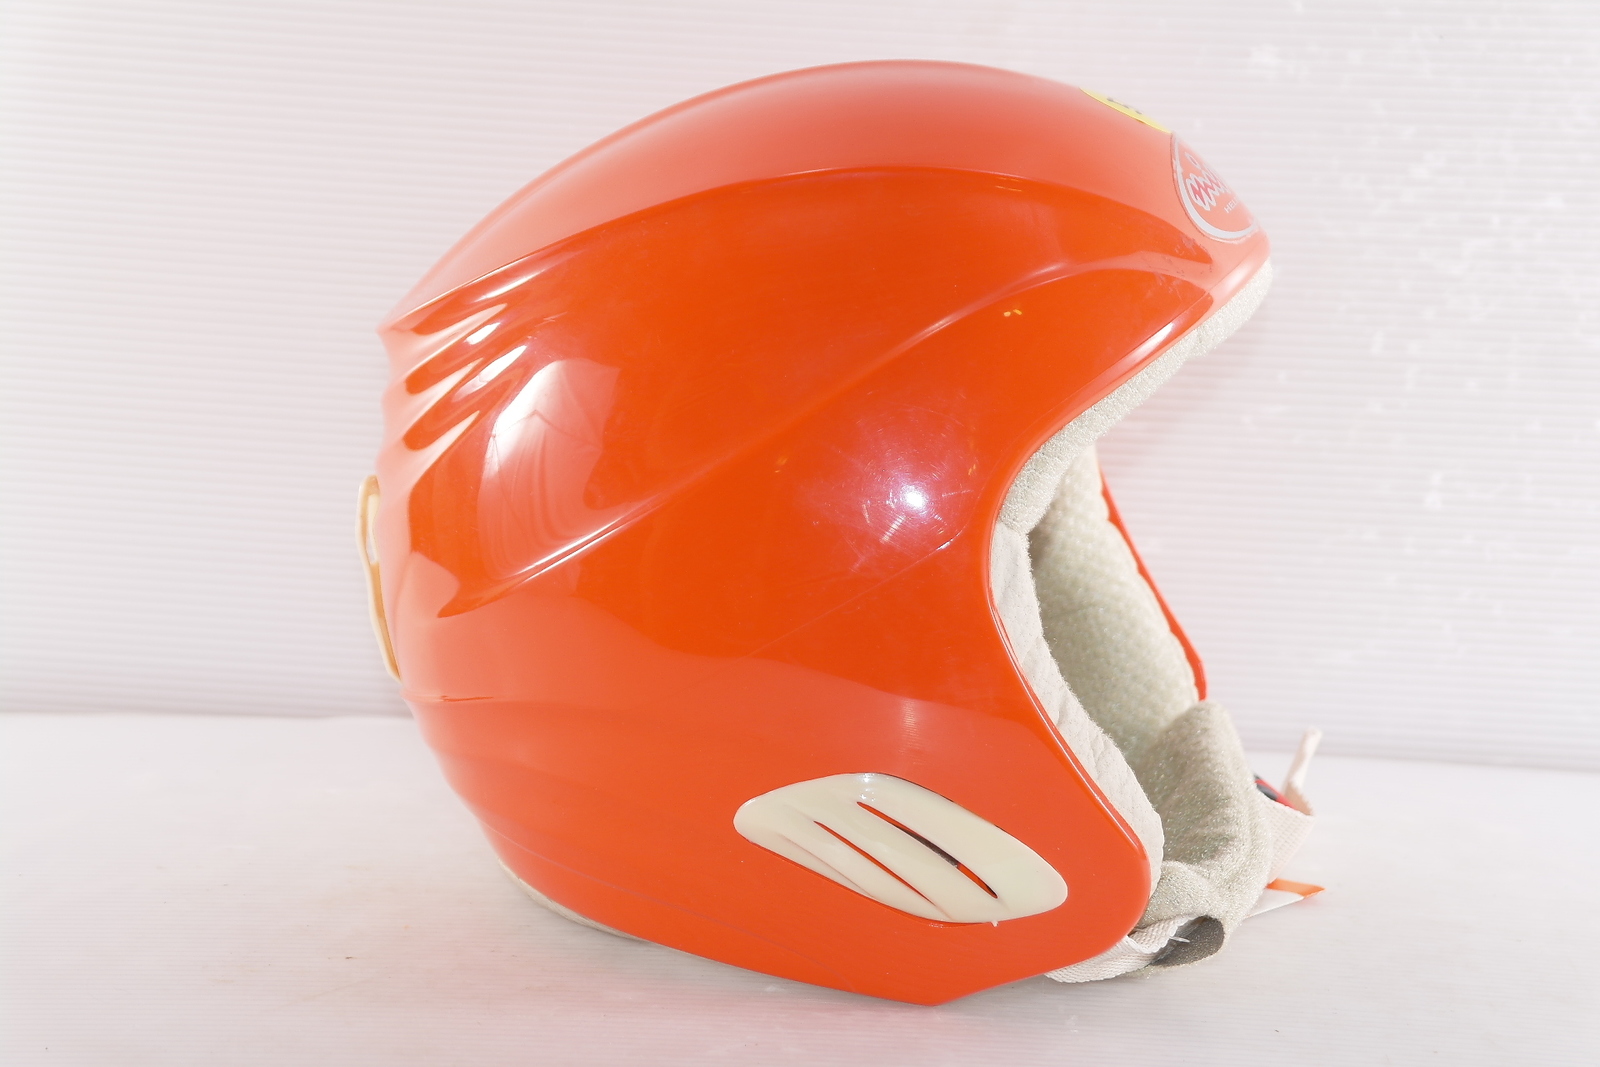 Dámská lyžařská helma Mivida Retro Orange vel. 56 cm